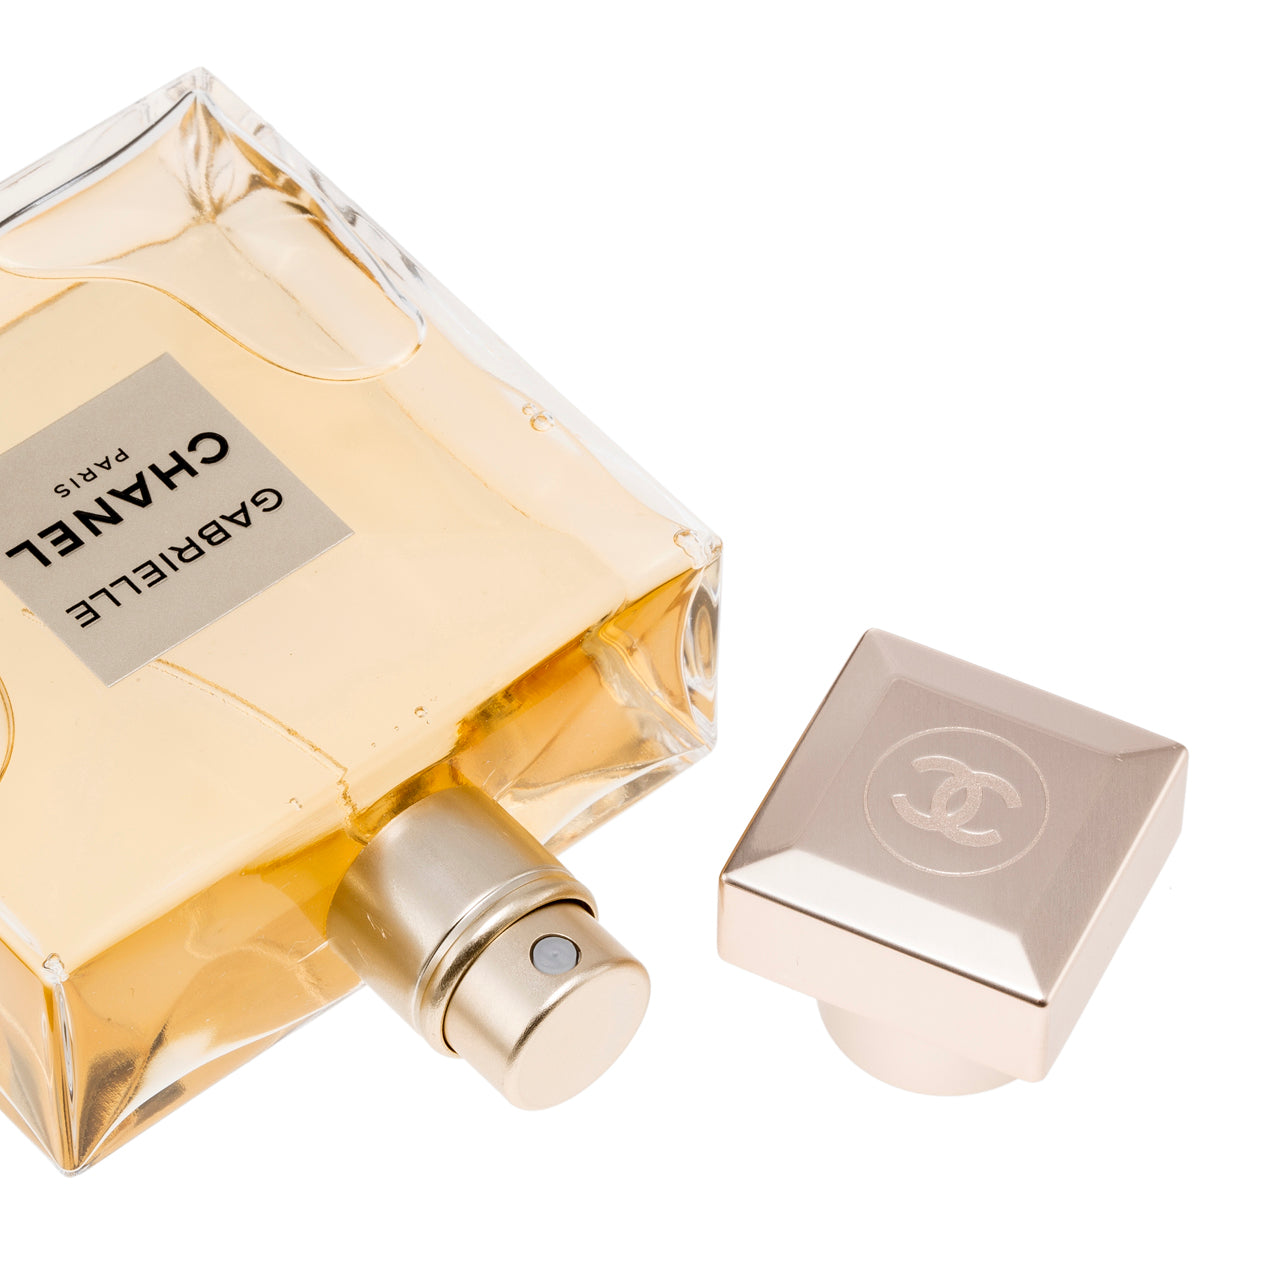 Chanel Gabrielle Chanel Eau de Parfum Spray 50ml | Sasa Global eShop